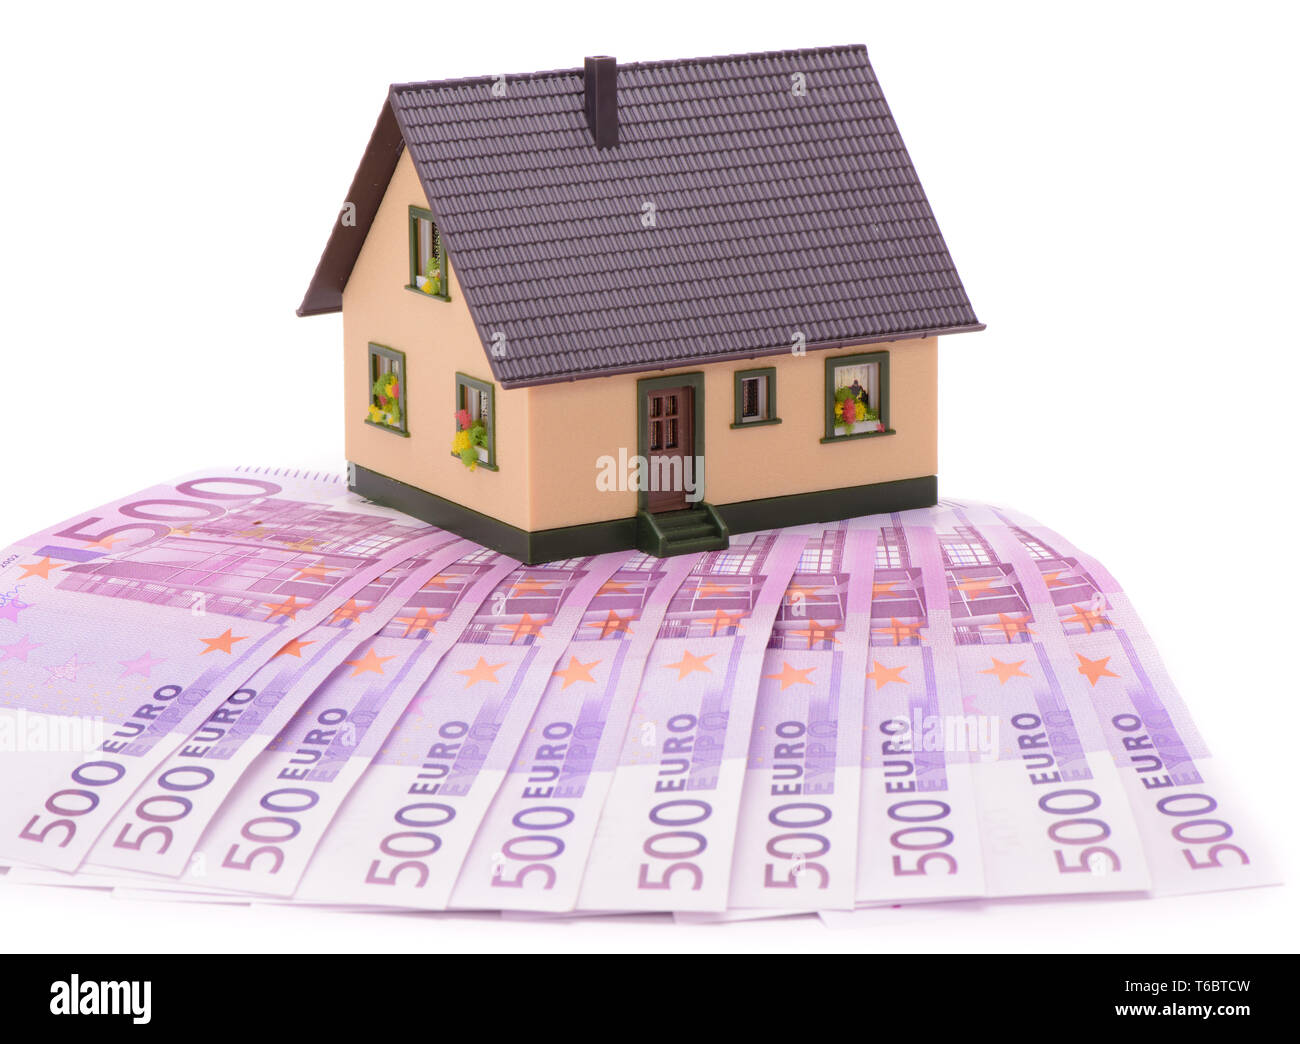 model house on 500 Euro banknotes Stock Photo